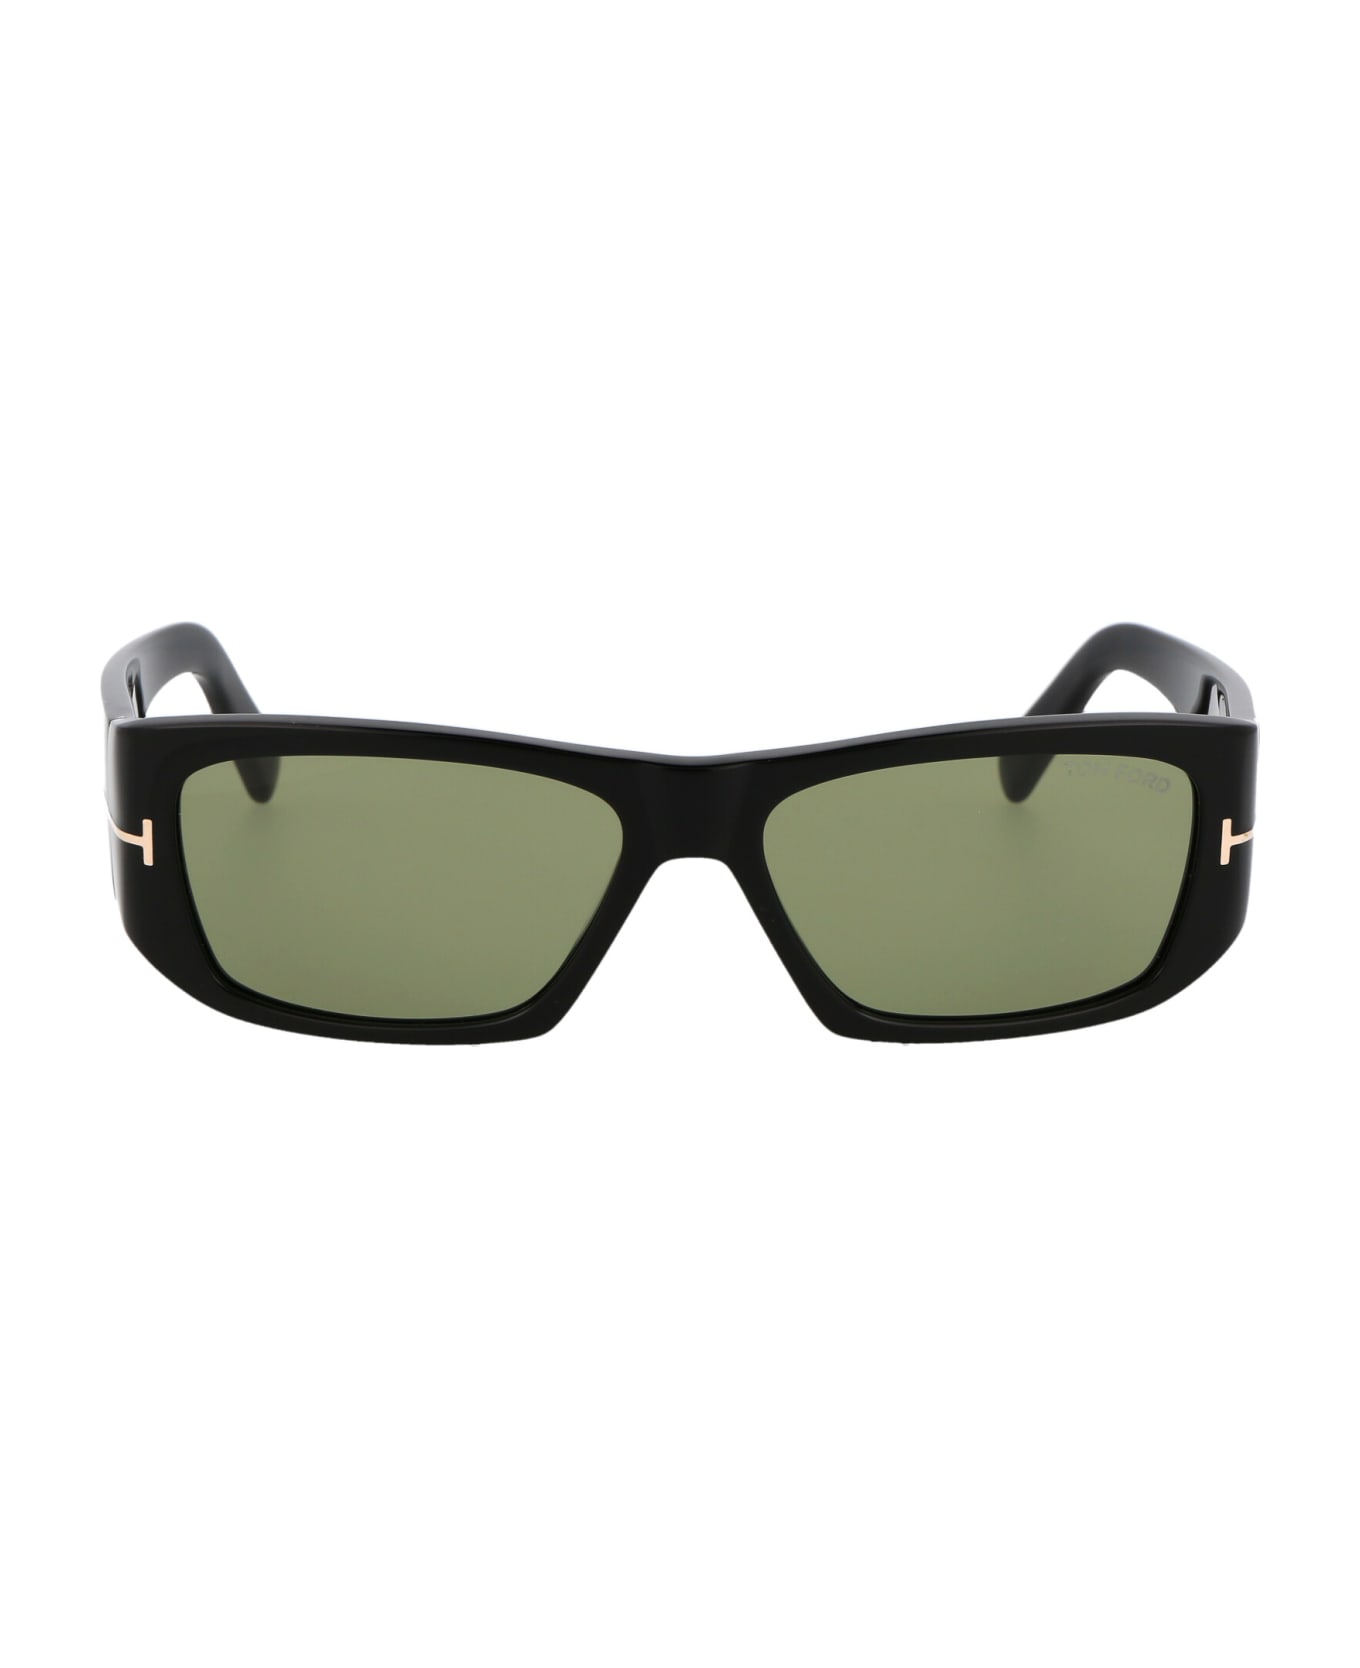 Tom Ford Eyewear Andres-02 Sunglasses - 01tortoiseshell-trim aviator sunglasses